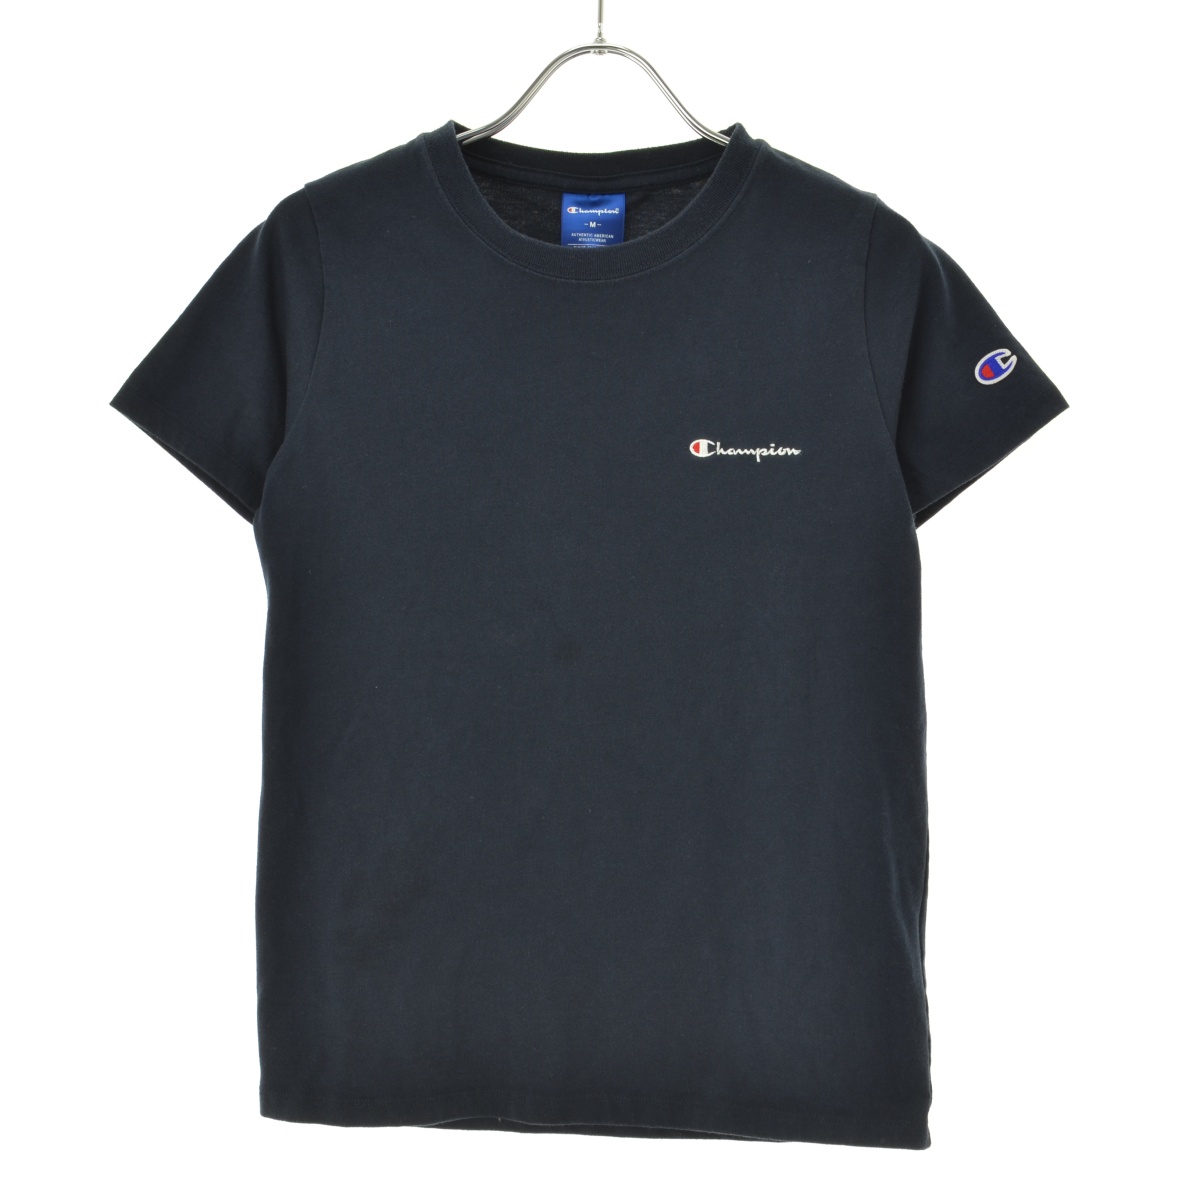 CHAMPION / チャンピオン ロゴ刺繍 半袖Tシャツ -ブランド古着の買取販売カンフル